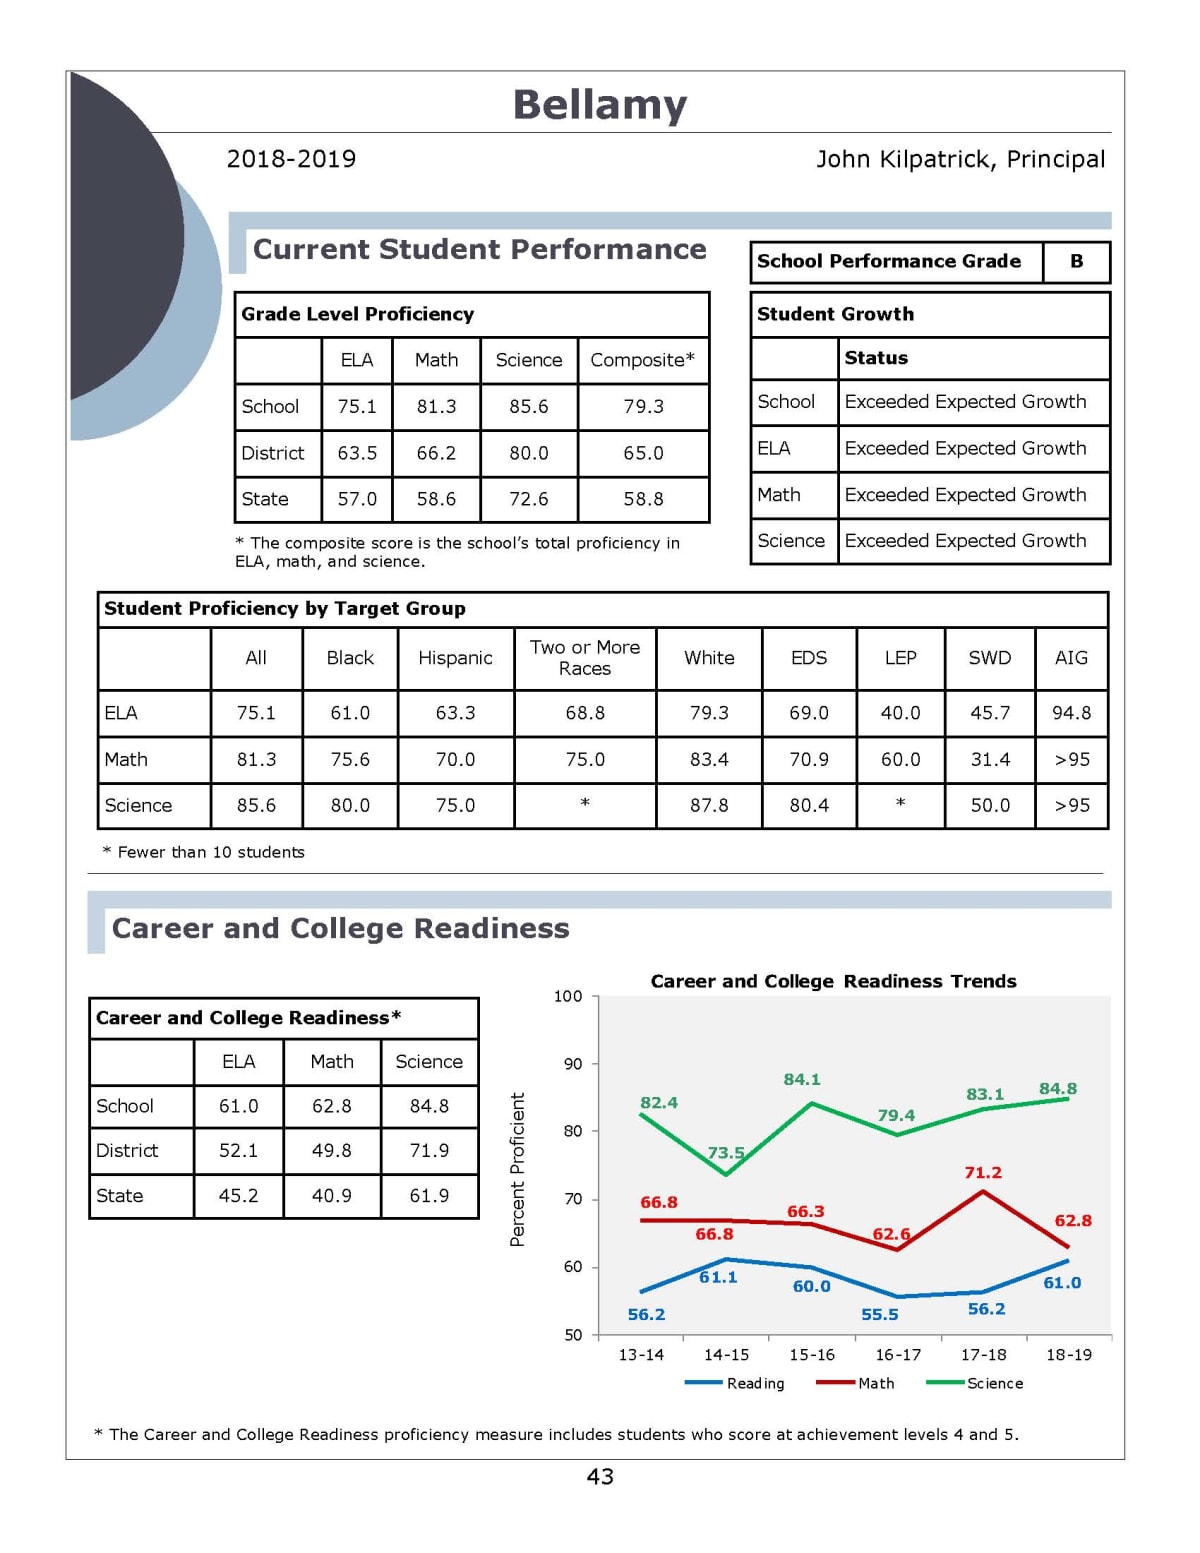 Annual Accountability Report - H. C. Bellamy Elementary